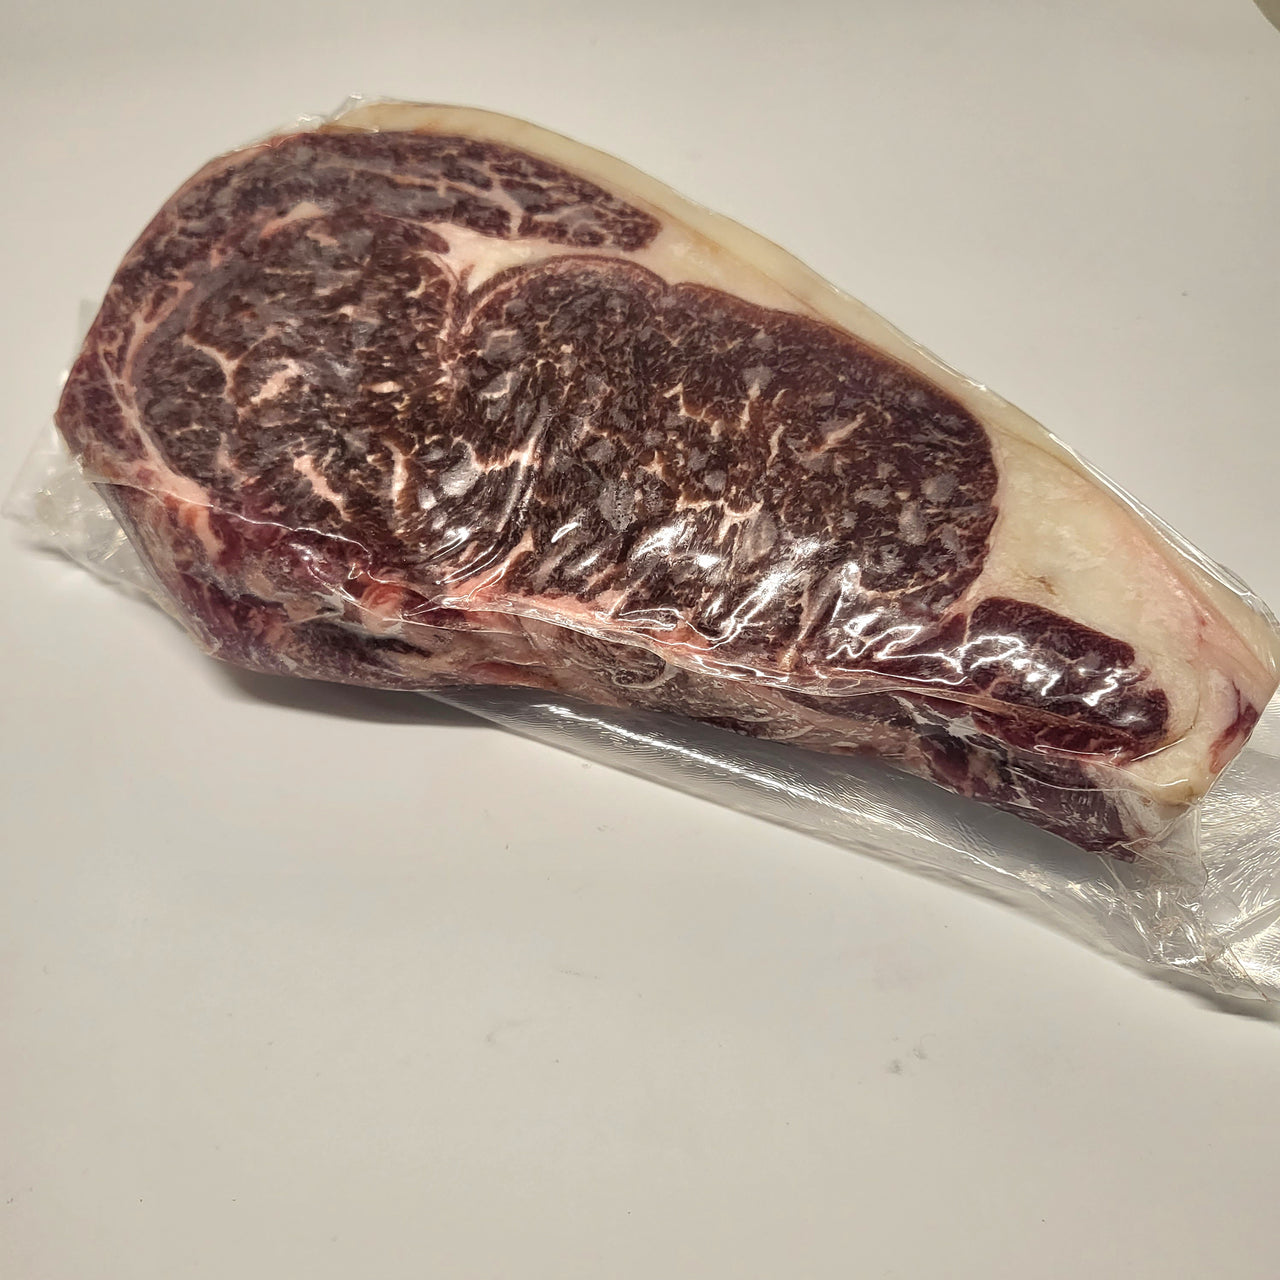 Grass Fed Grass Finished Beef Ribeye Steak Bone OUT Japanese Black Wagyu Beef Full Blood AGED 21+ Days